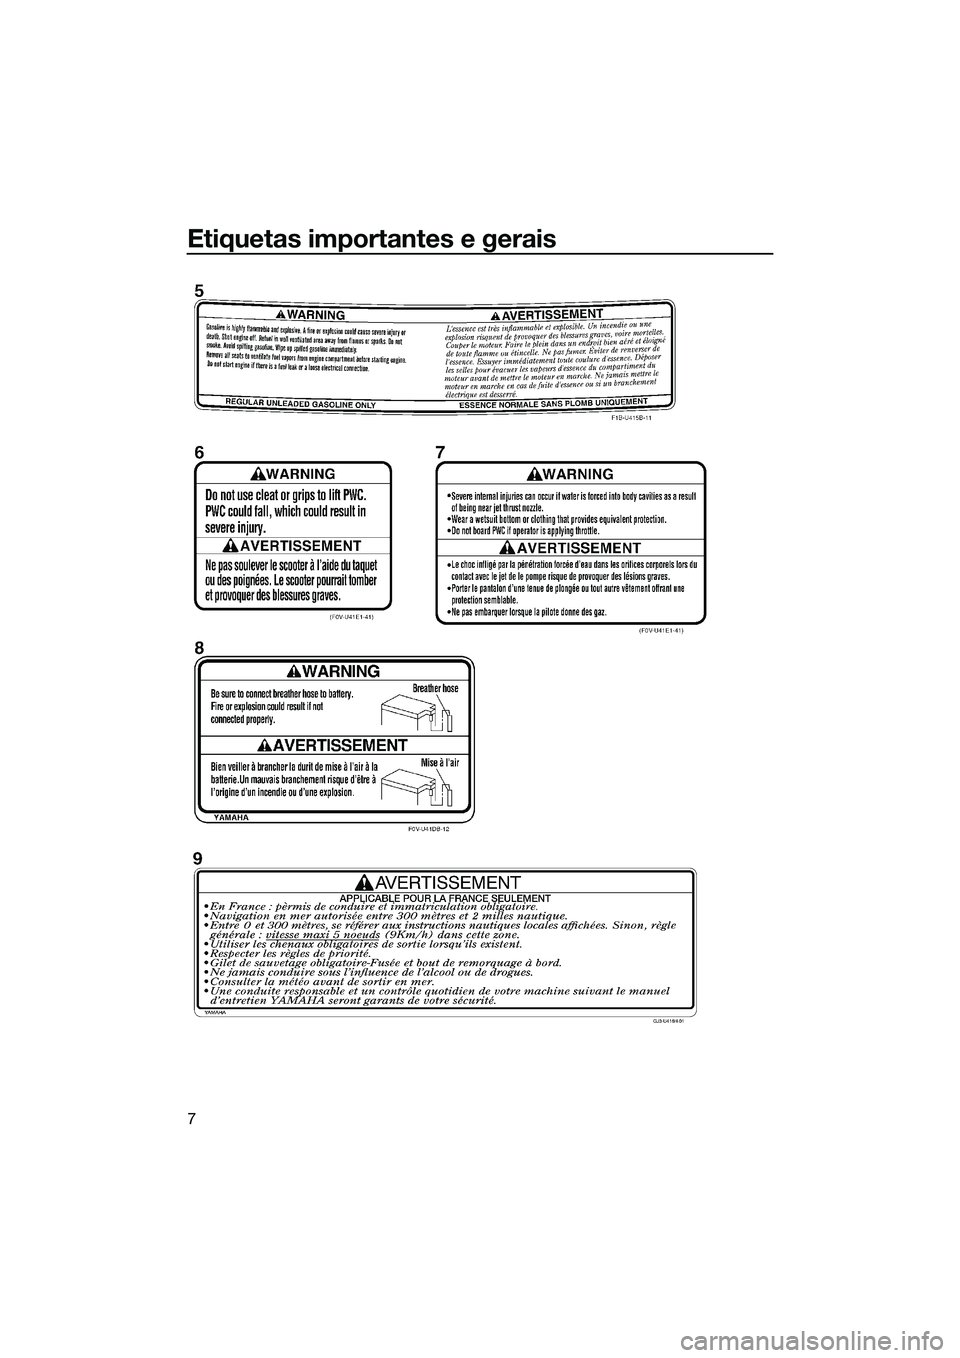 YAMAHA V1 SPORT 2015  Manual de utilização (in Portuguese) Etiquetas importantes e gerais
7
UF2P72P0.book  Page 7  Monday, August 25, 2014  2:33 PM 